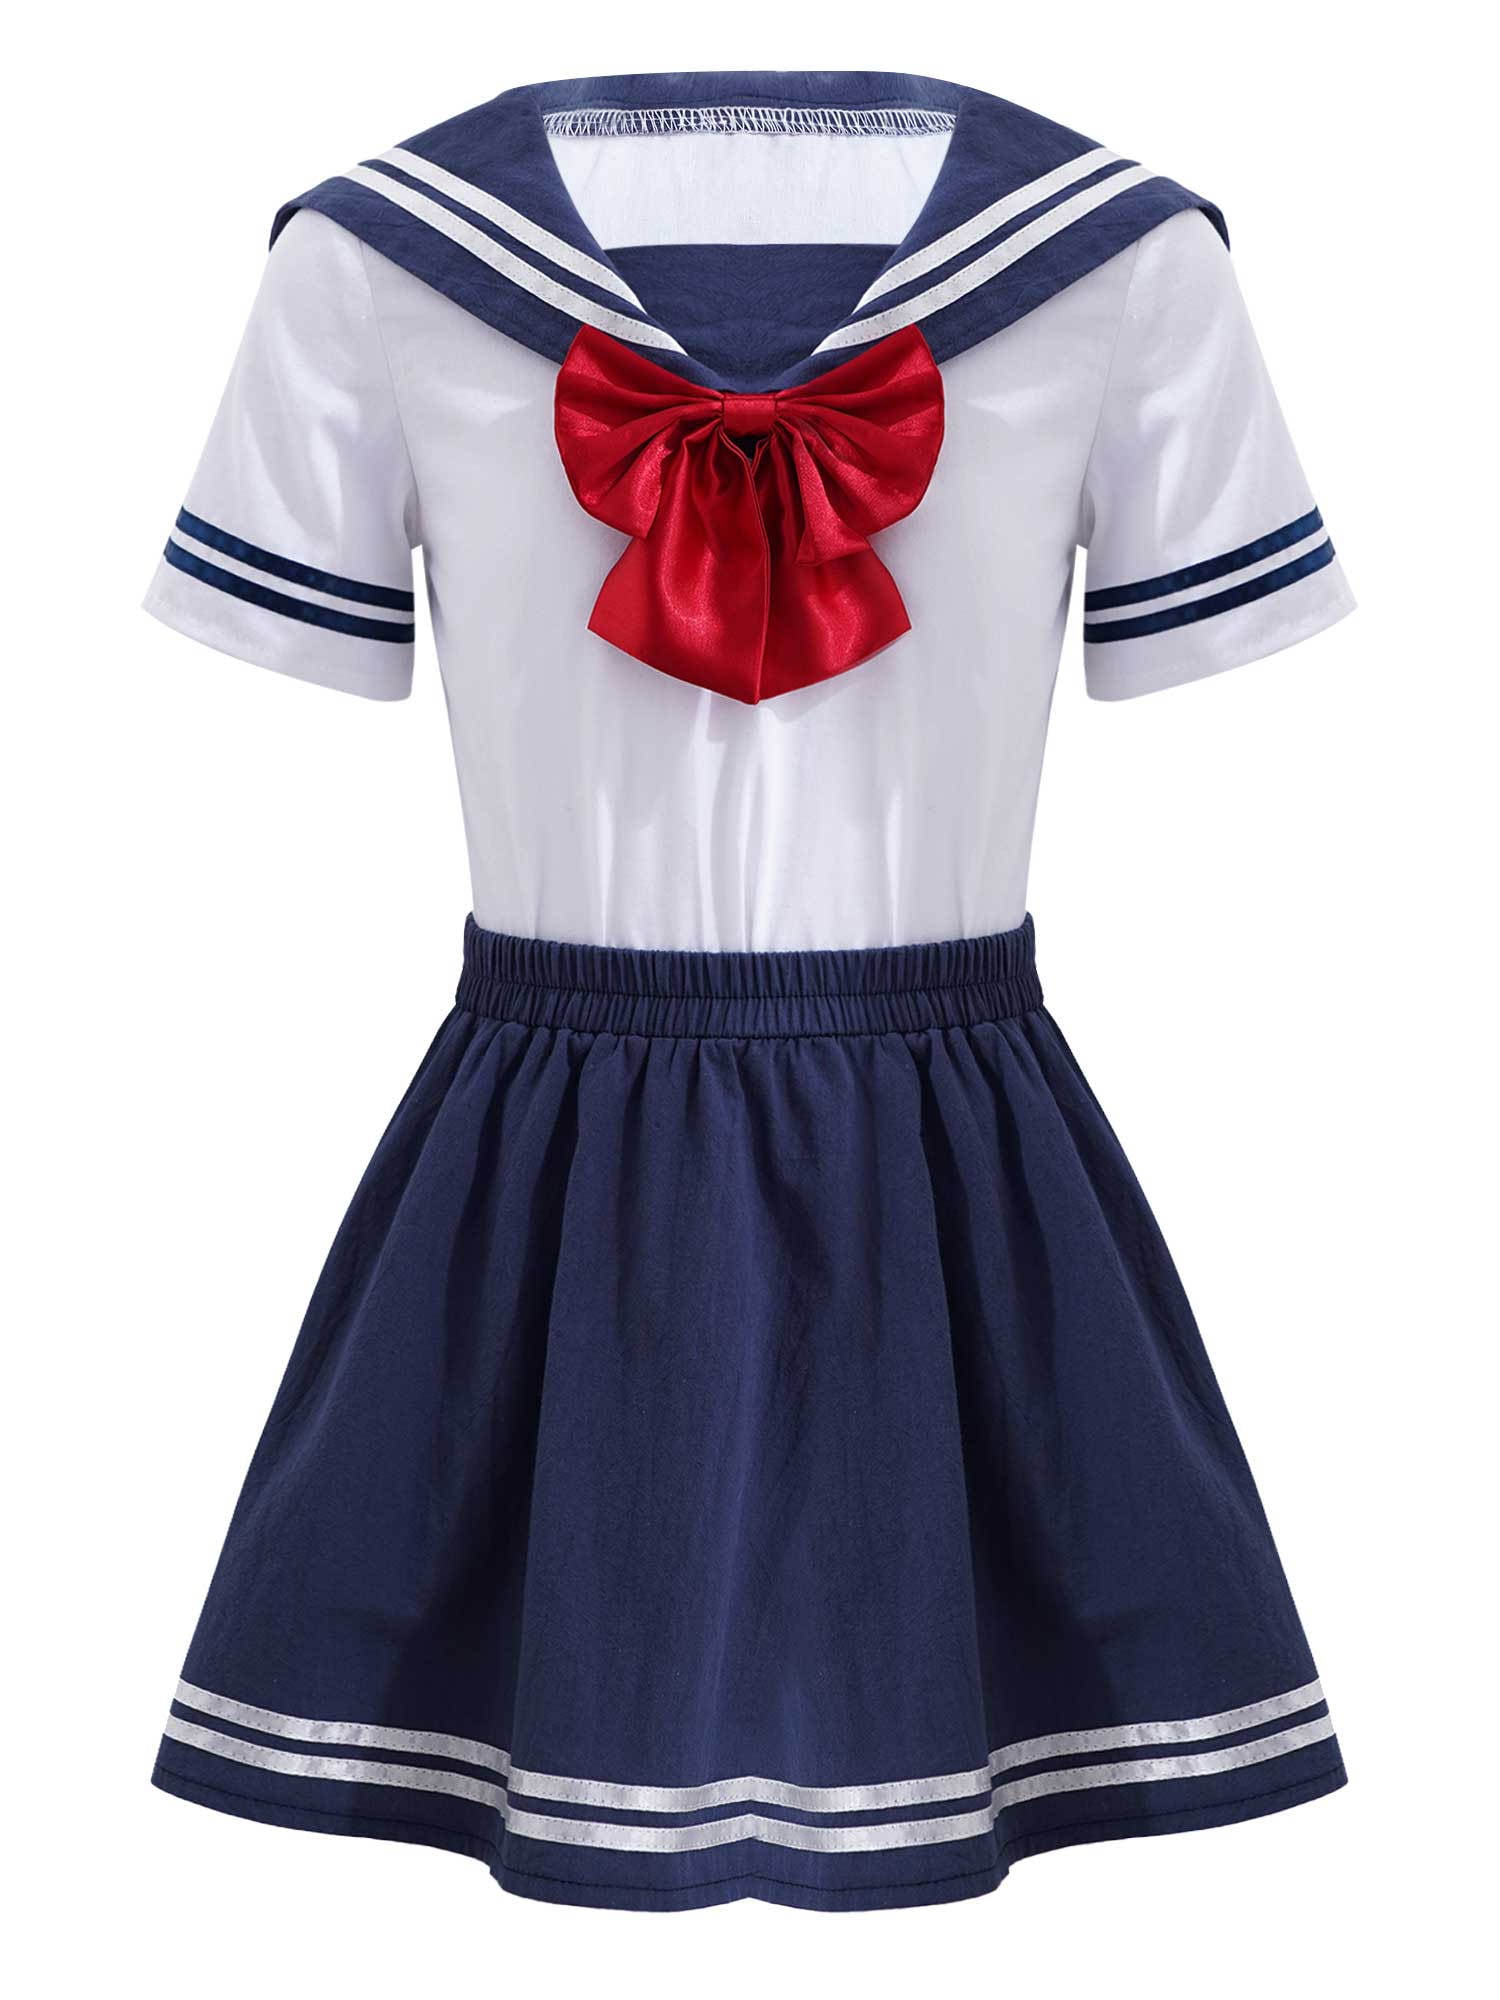 Cute Sailor Uniforms | Costume design, Anime outfits, Anime dress